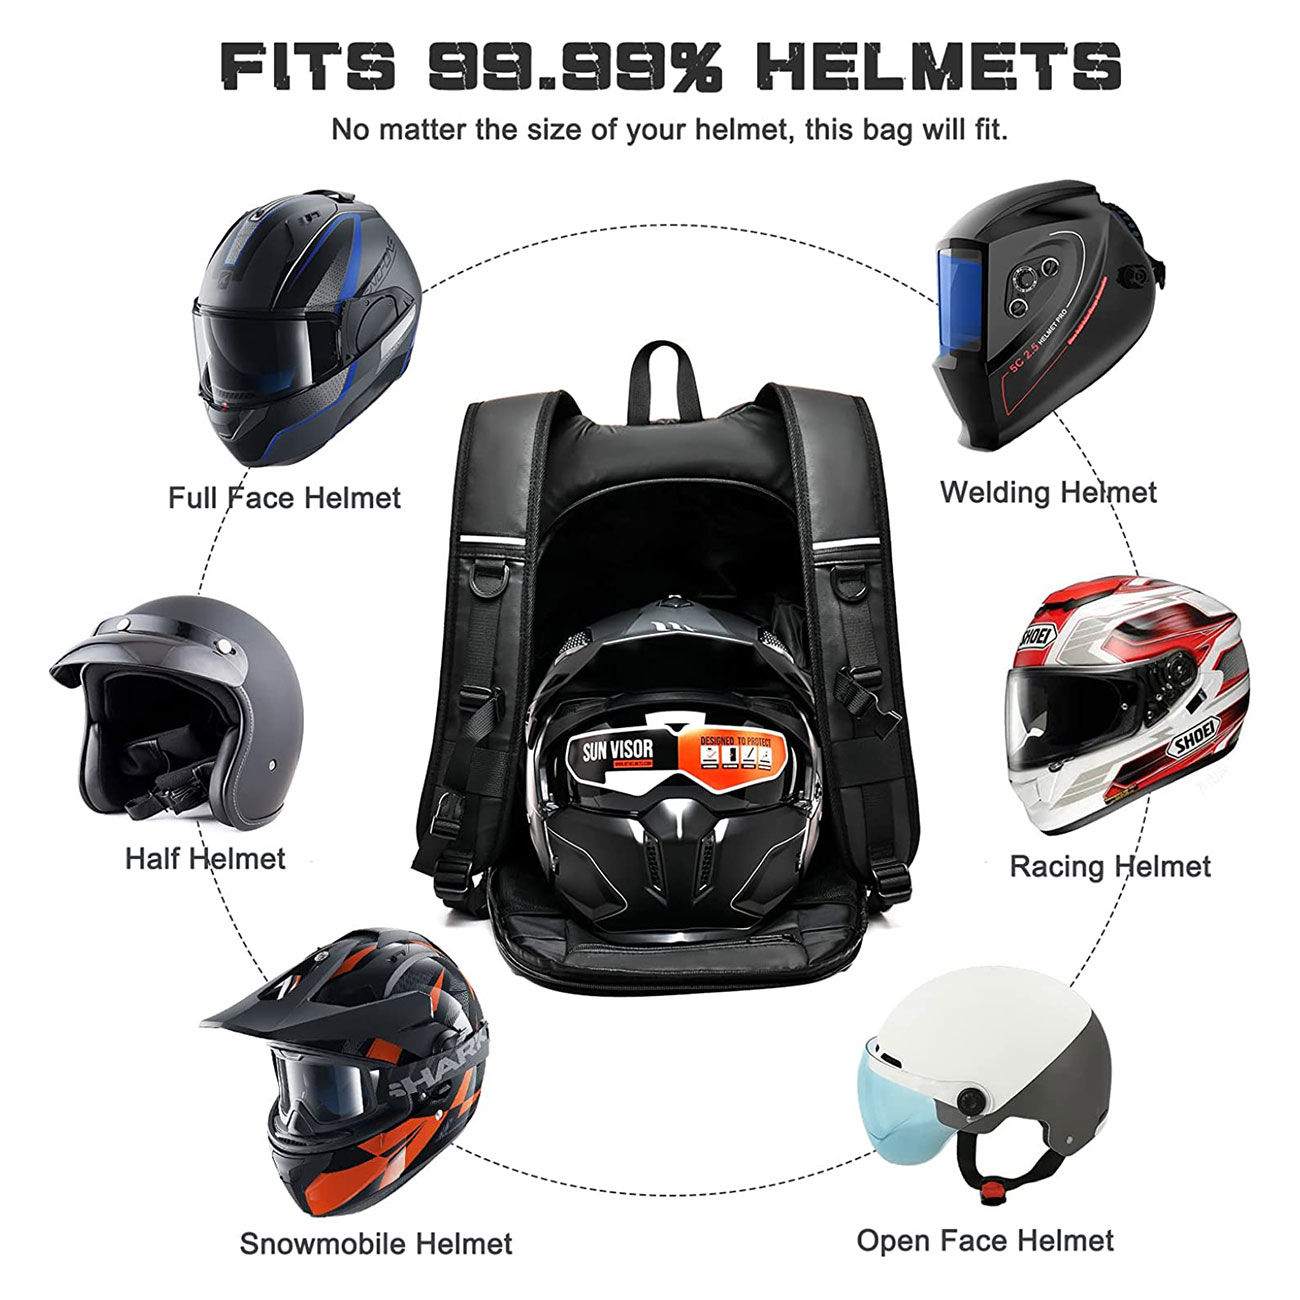 Waterproof Motorcycle Backpack - Perfect for Men Riders - Essential  Motorcycle Accessories!